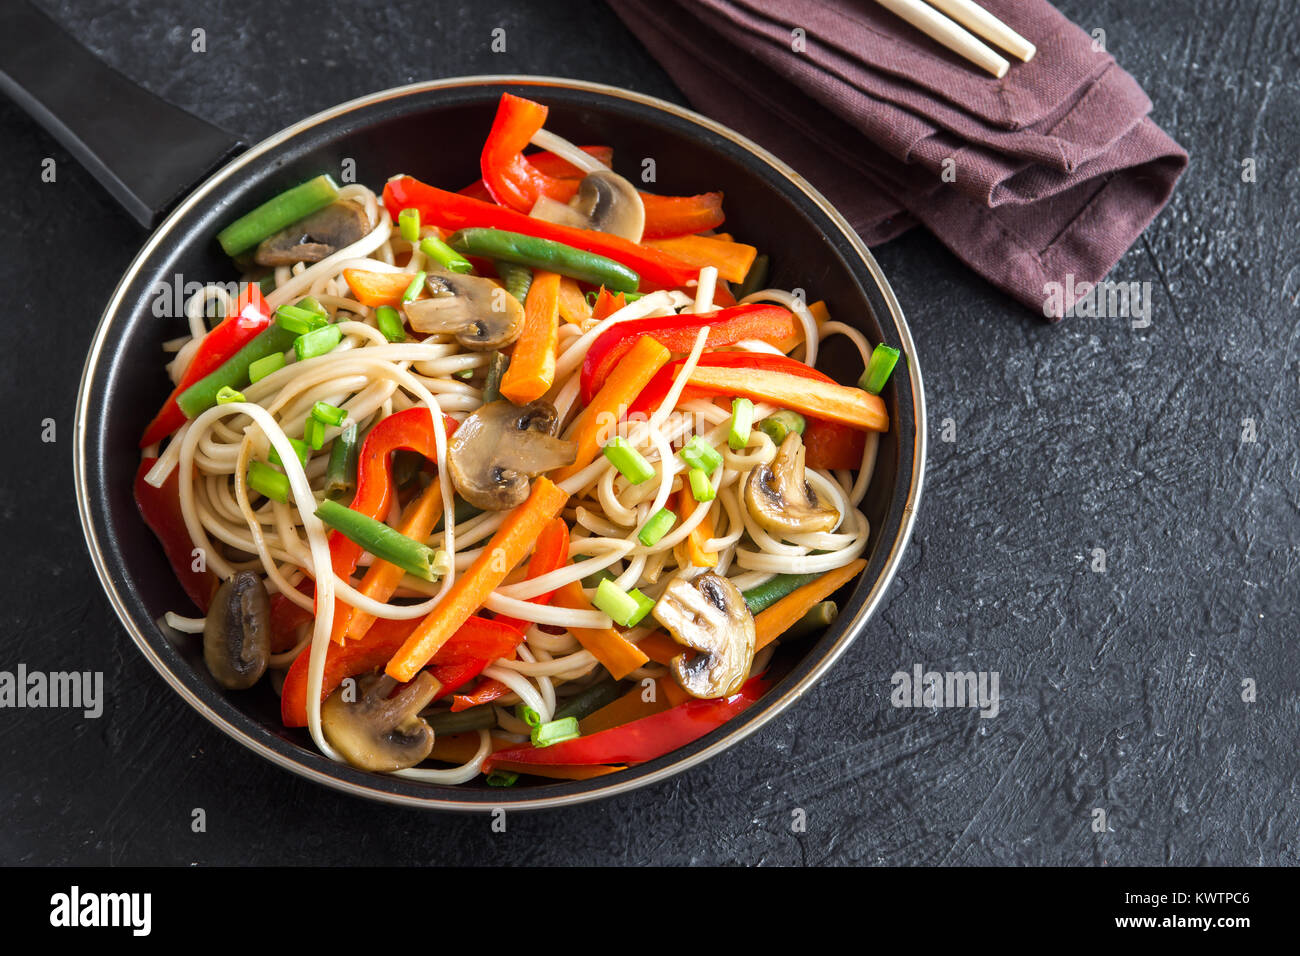 Stir fry with udon noodles, mushrooms and vegetables. Asian vegan vegetarian food, meal, stir fry over black background, copy space. Stock Photo